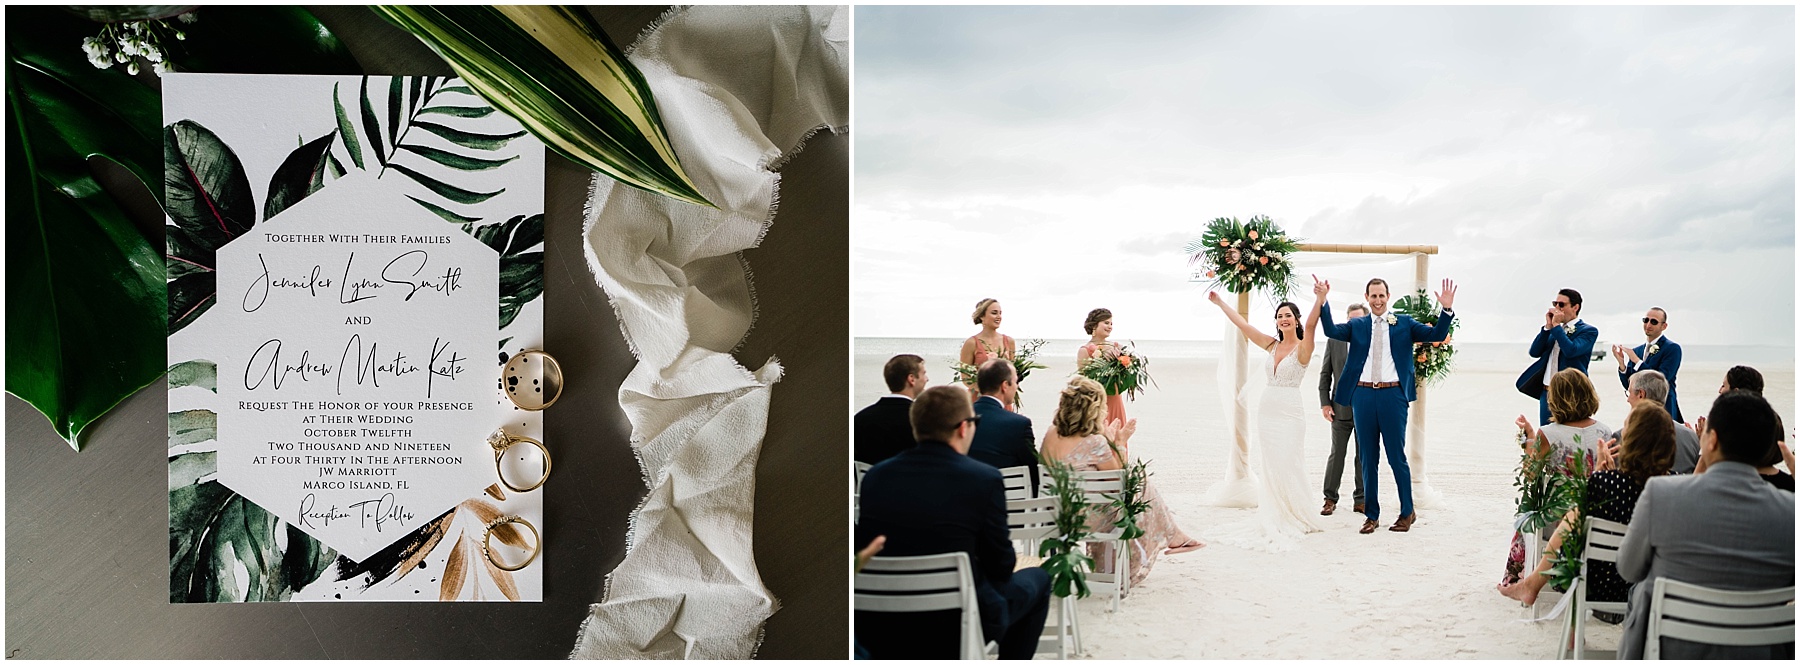 Tropical wedding details at JW Marriott Marco Island in Florida.